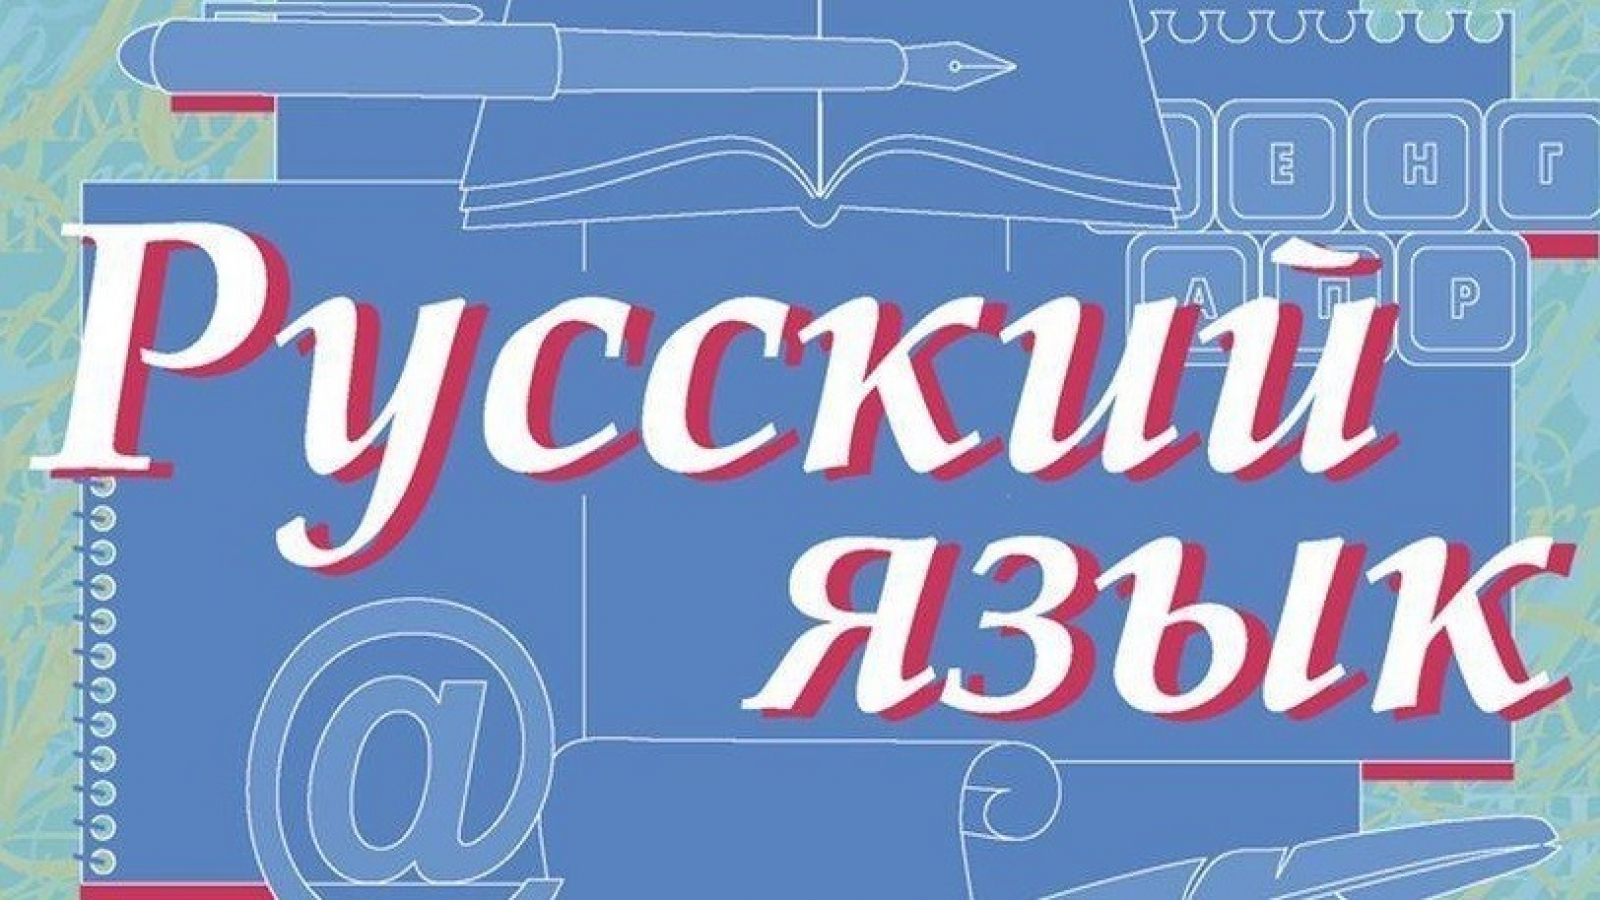 Everything русский язык